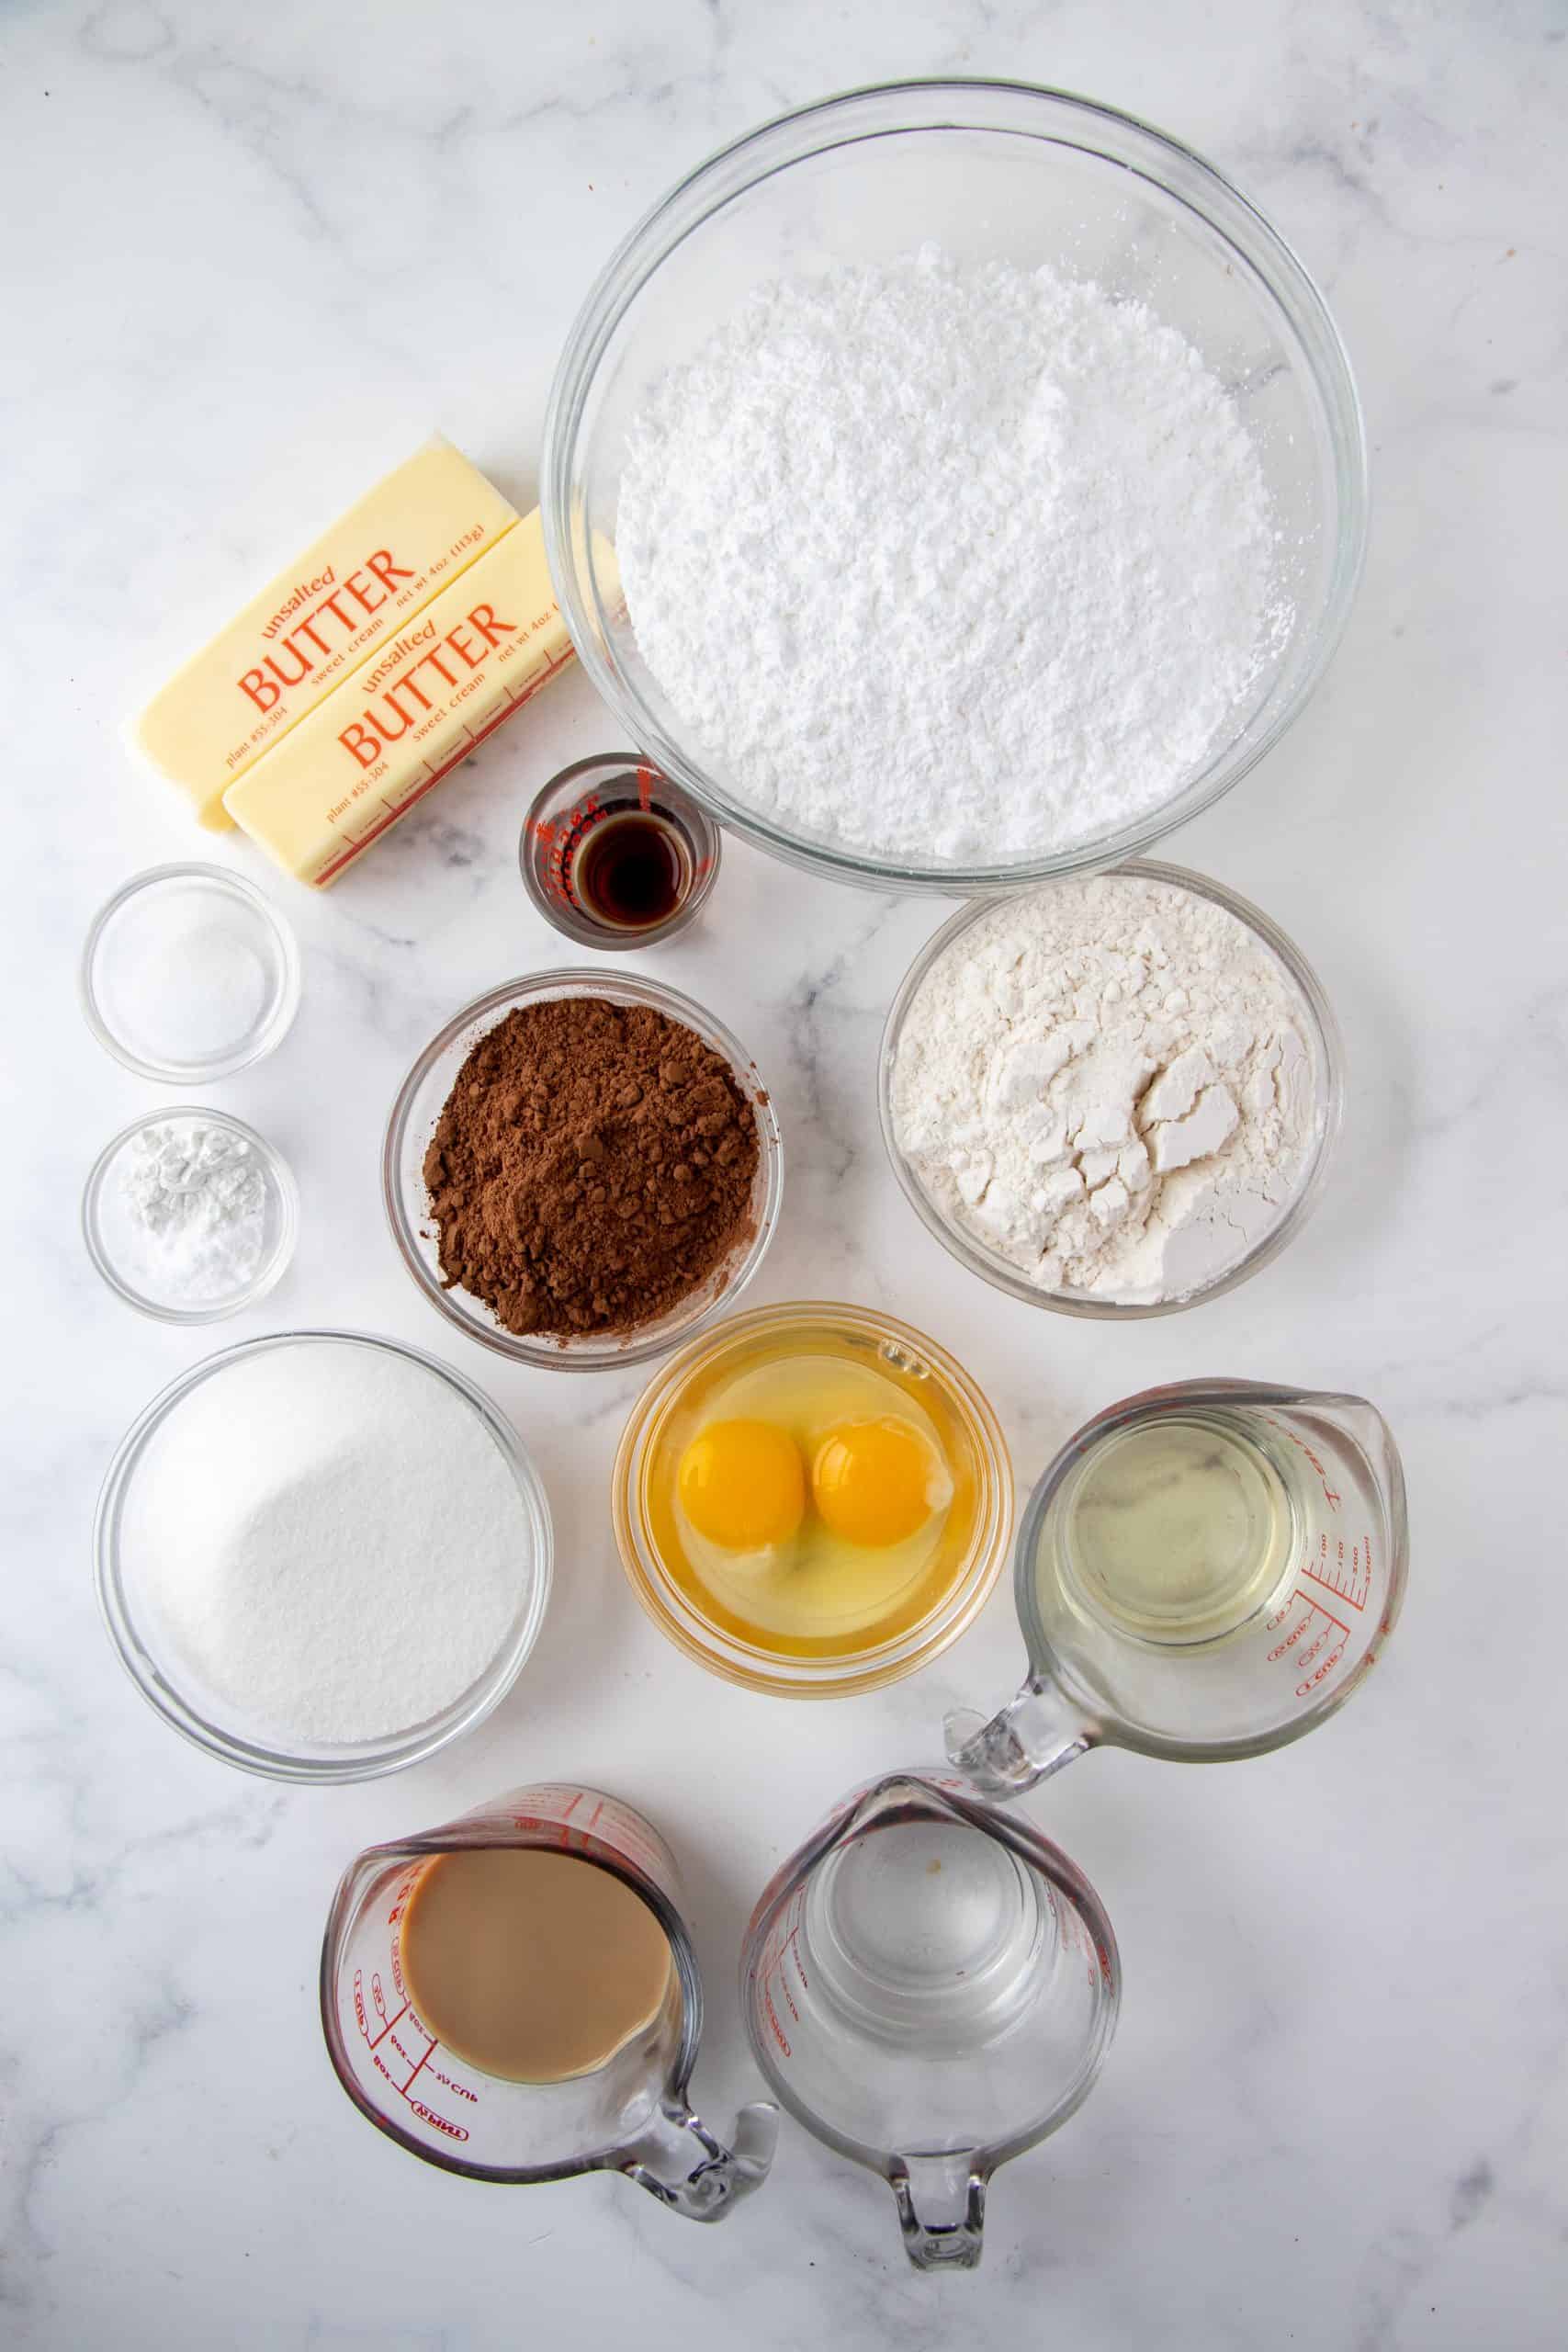 Ingredients need to make Homemade Baileys Cupcakes: all-purpose flour, sugar, cocoa powder, baking powder, baking soda, salt, vanilla extract, eggs, Baileys Irish Cream, water, oil, butter, powdered sugar.